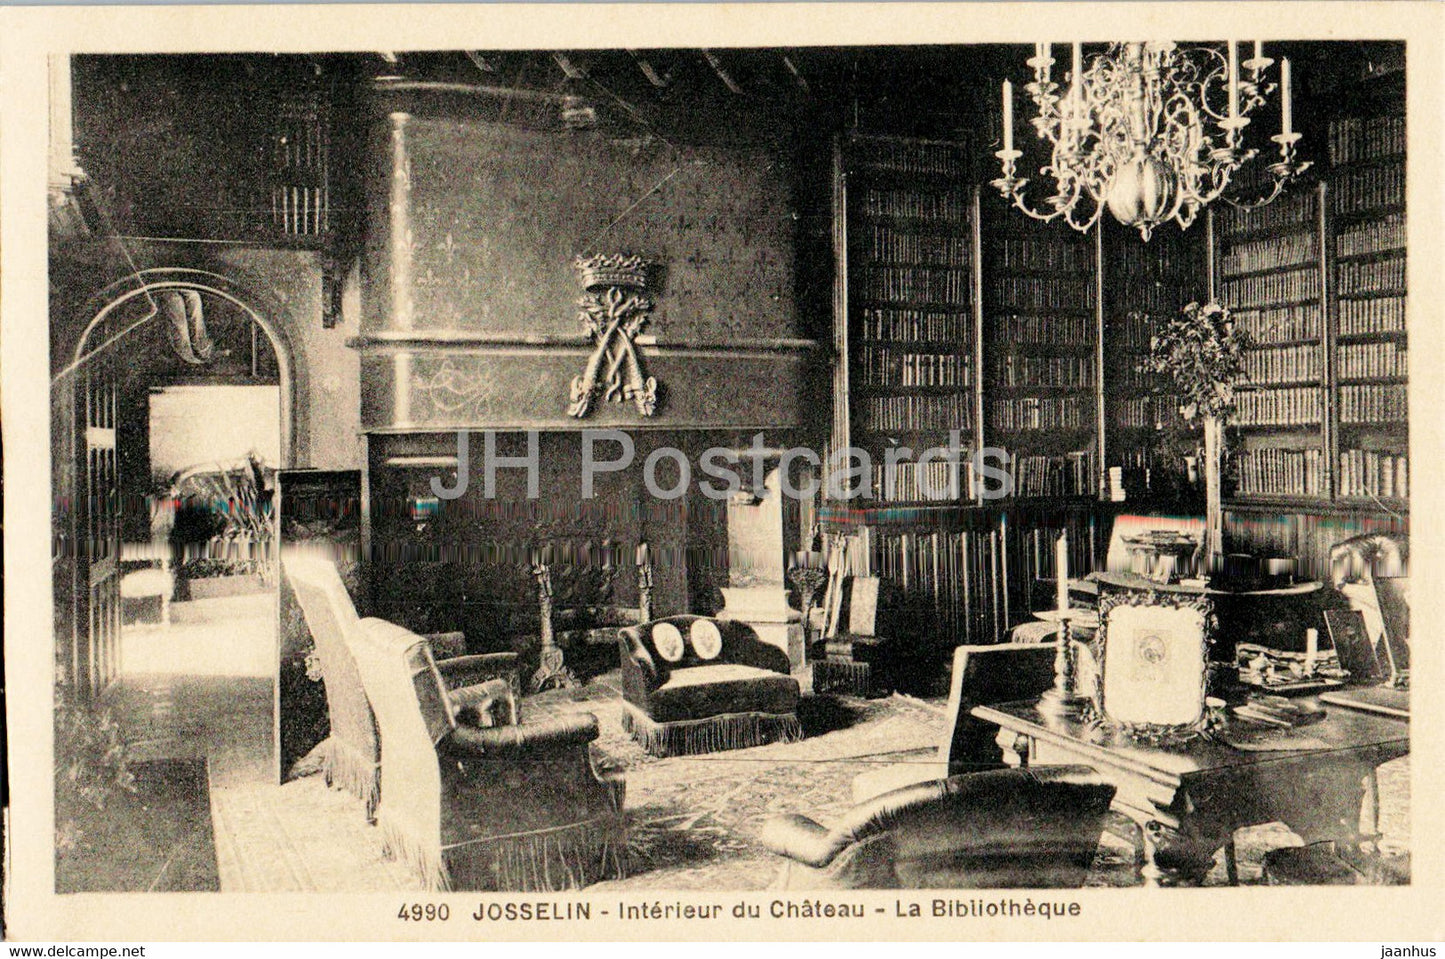 Josselin - Interieur du Chateau - La Bibliotheque - library - castle - 4990 - old postcard - France - unused - JH Postcards